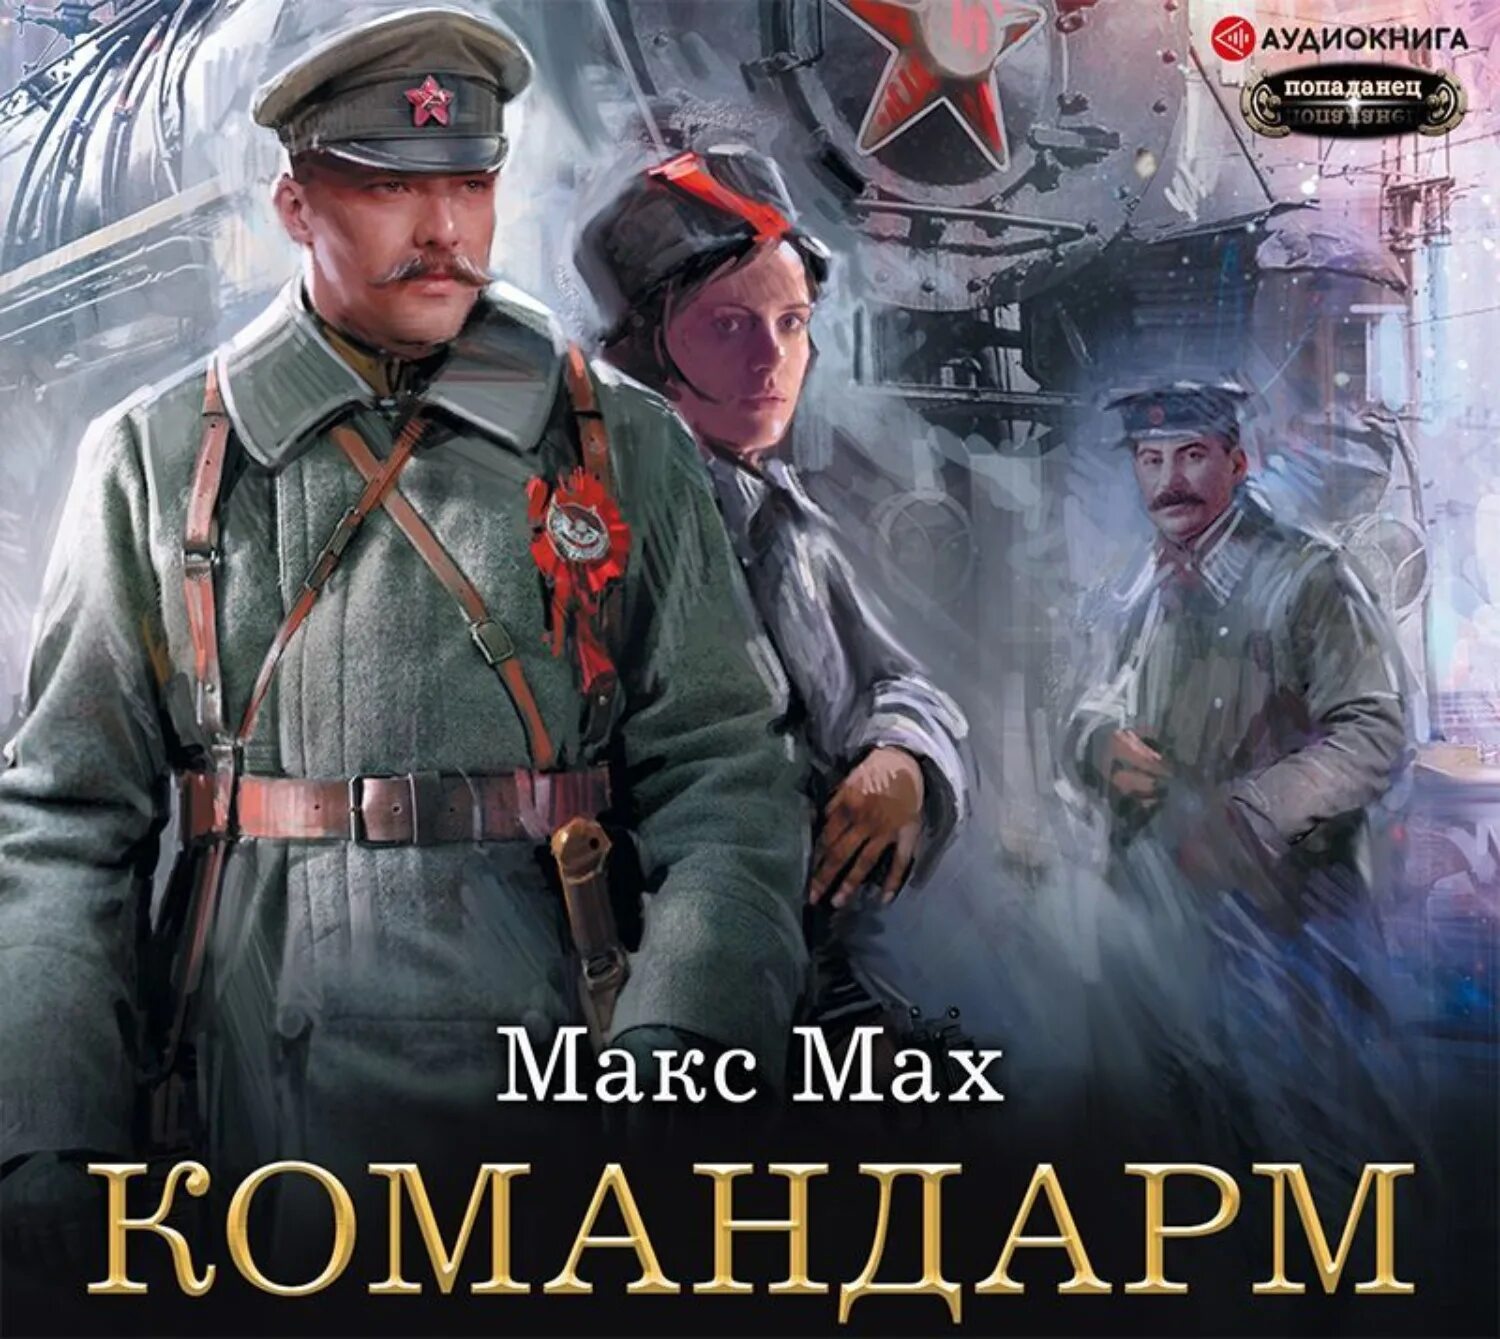 Аудиокнига попаданец. Мах Макс "Командарм". Попаданцы в СССР. Попаданец в СССР.